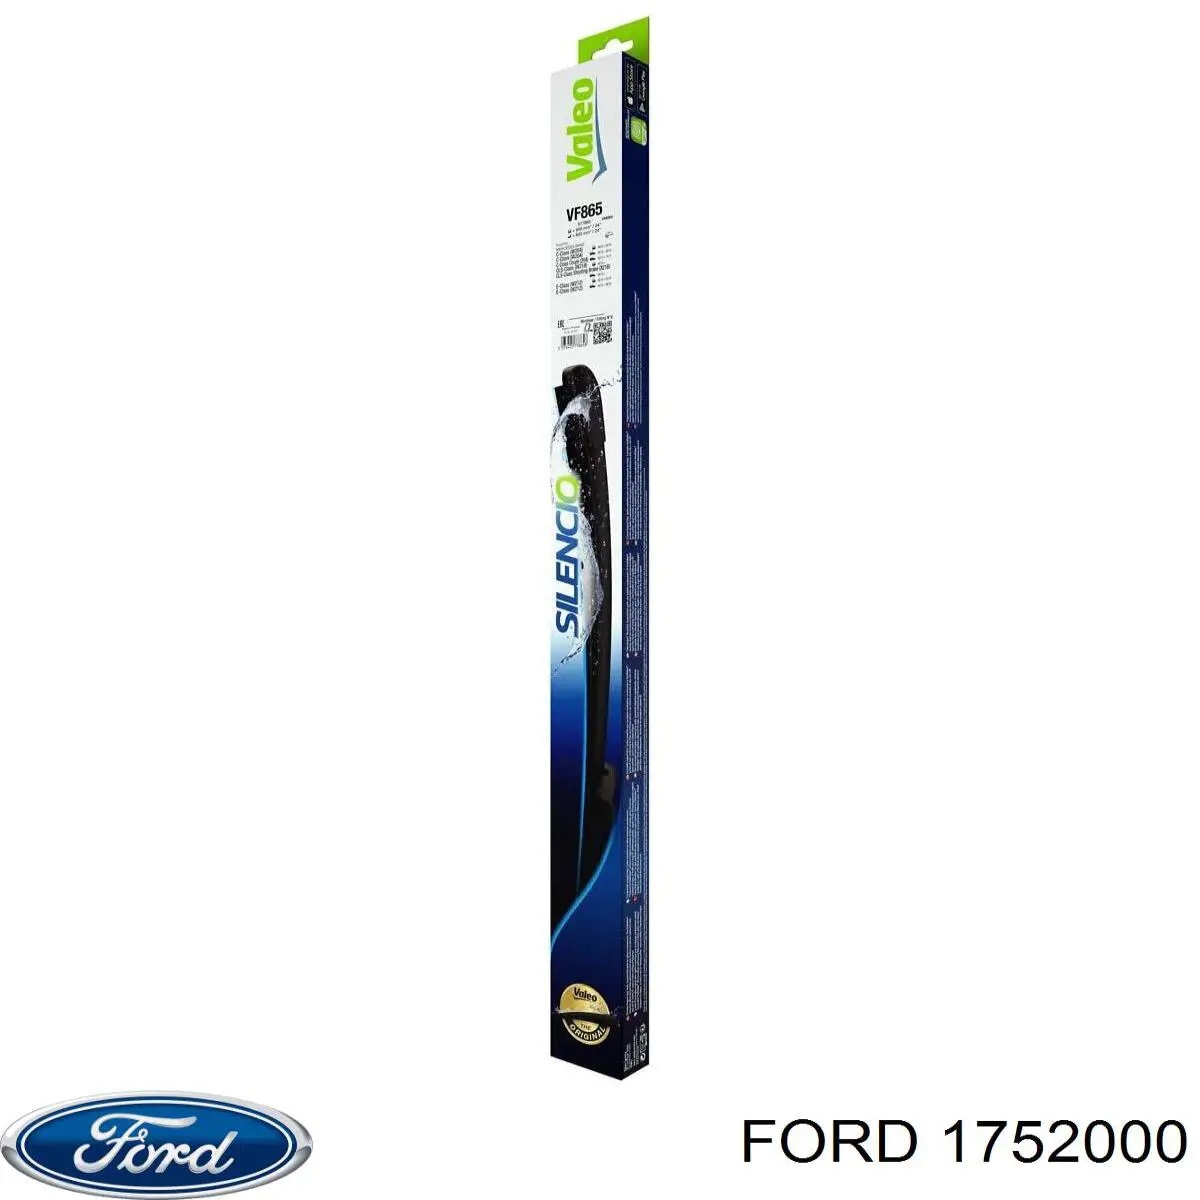 1850543 Ford limpiaparabrisas